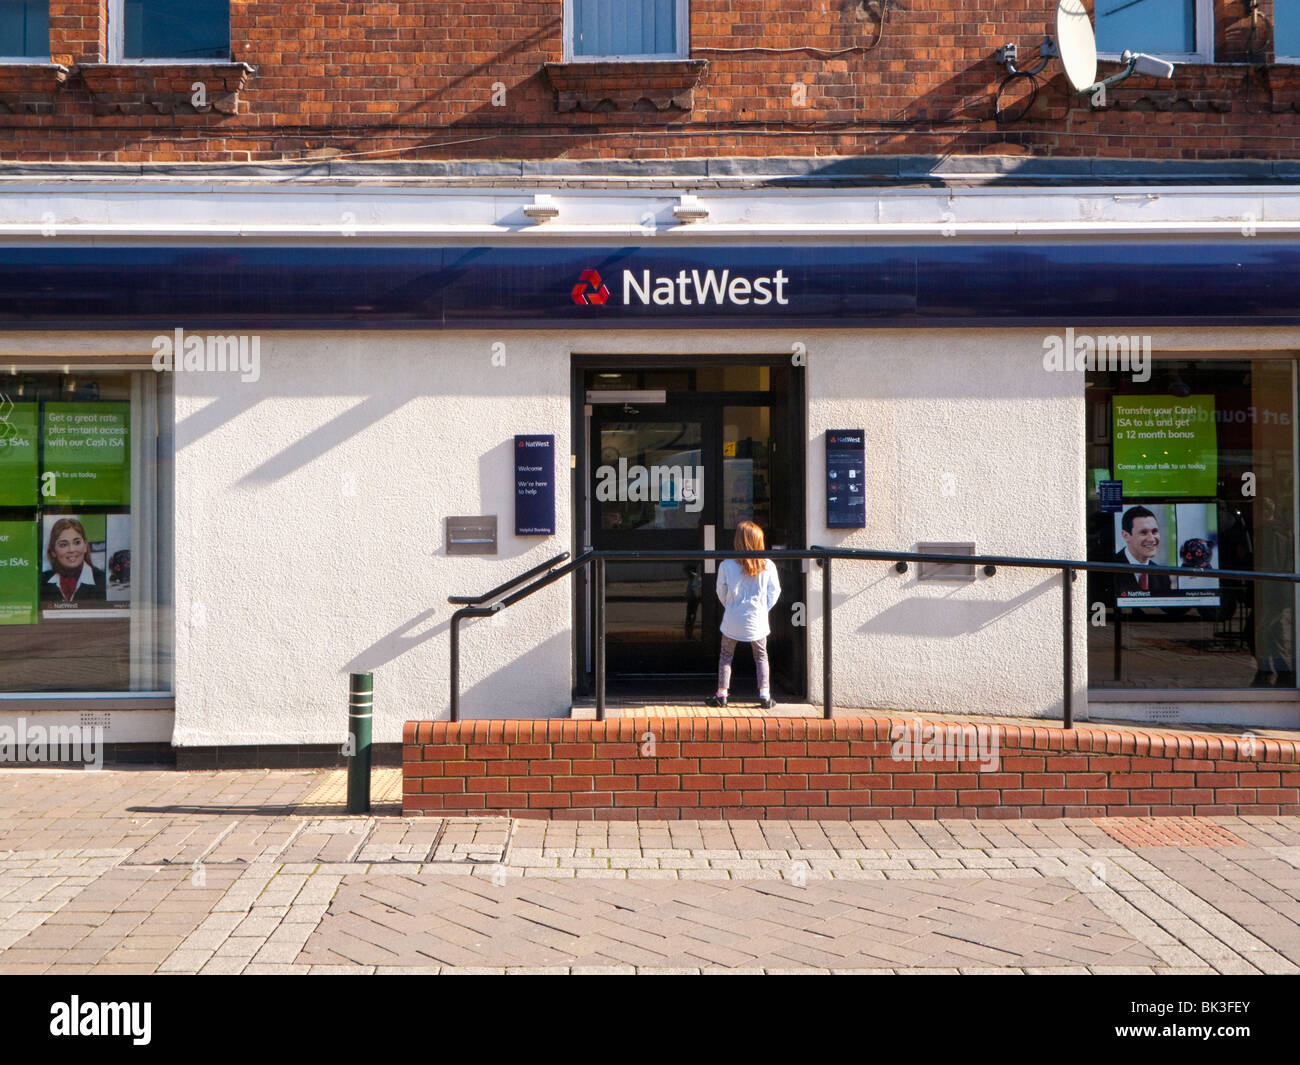 NatWest bank, National Westminster Bank with logo England UK Stock Photo